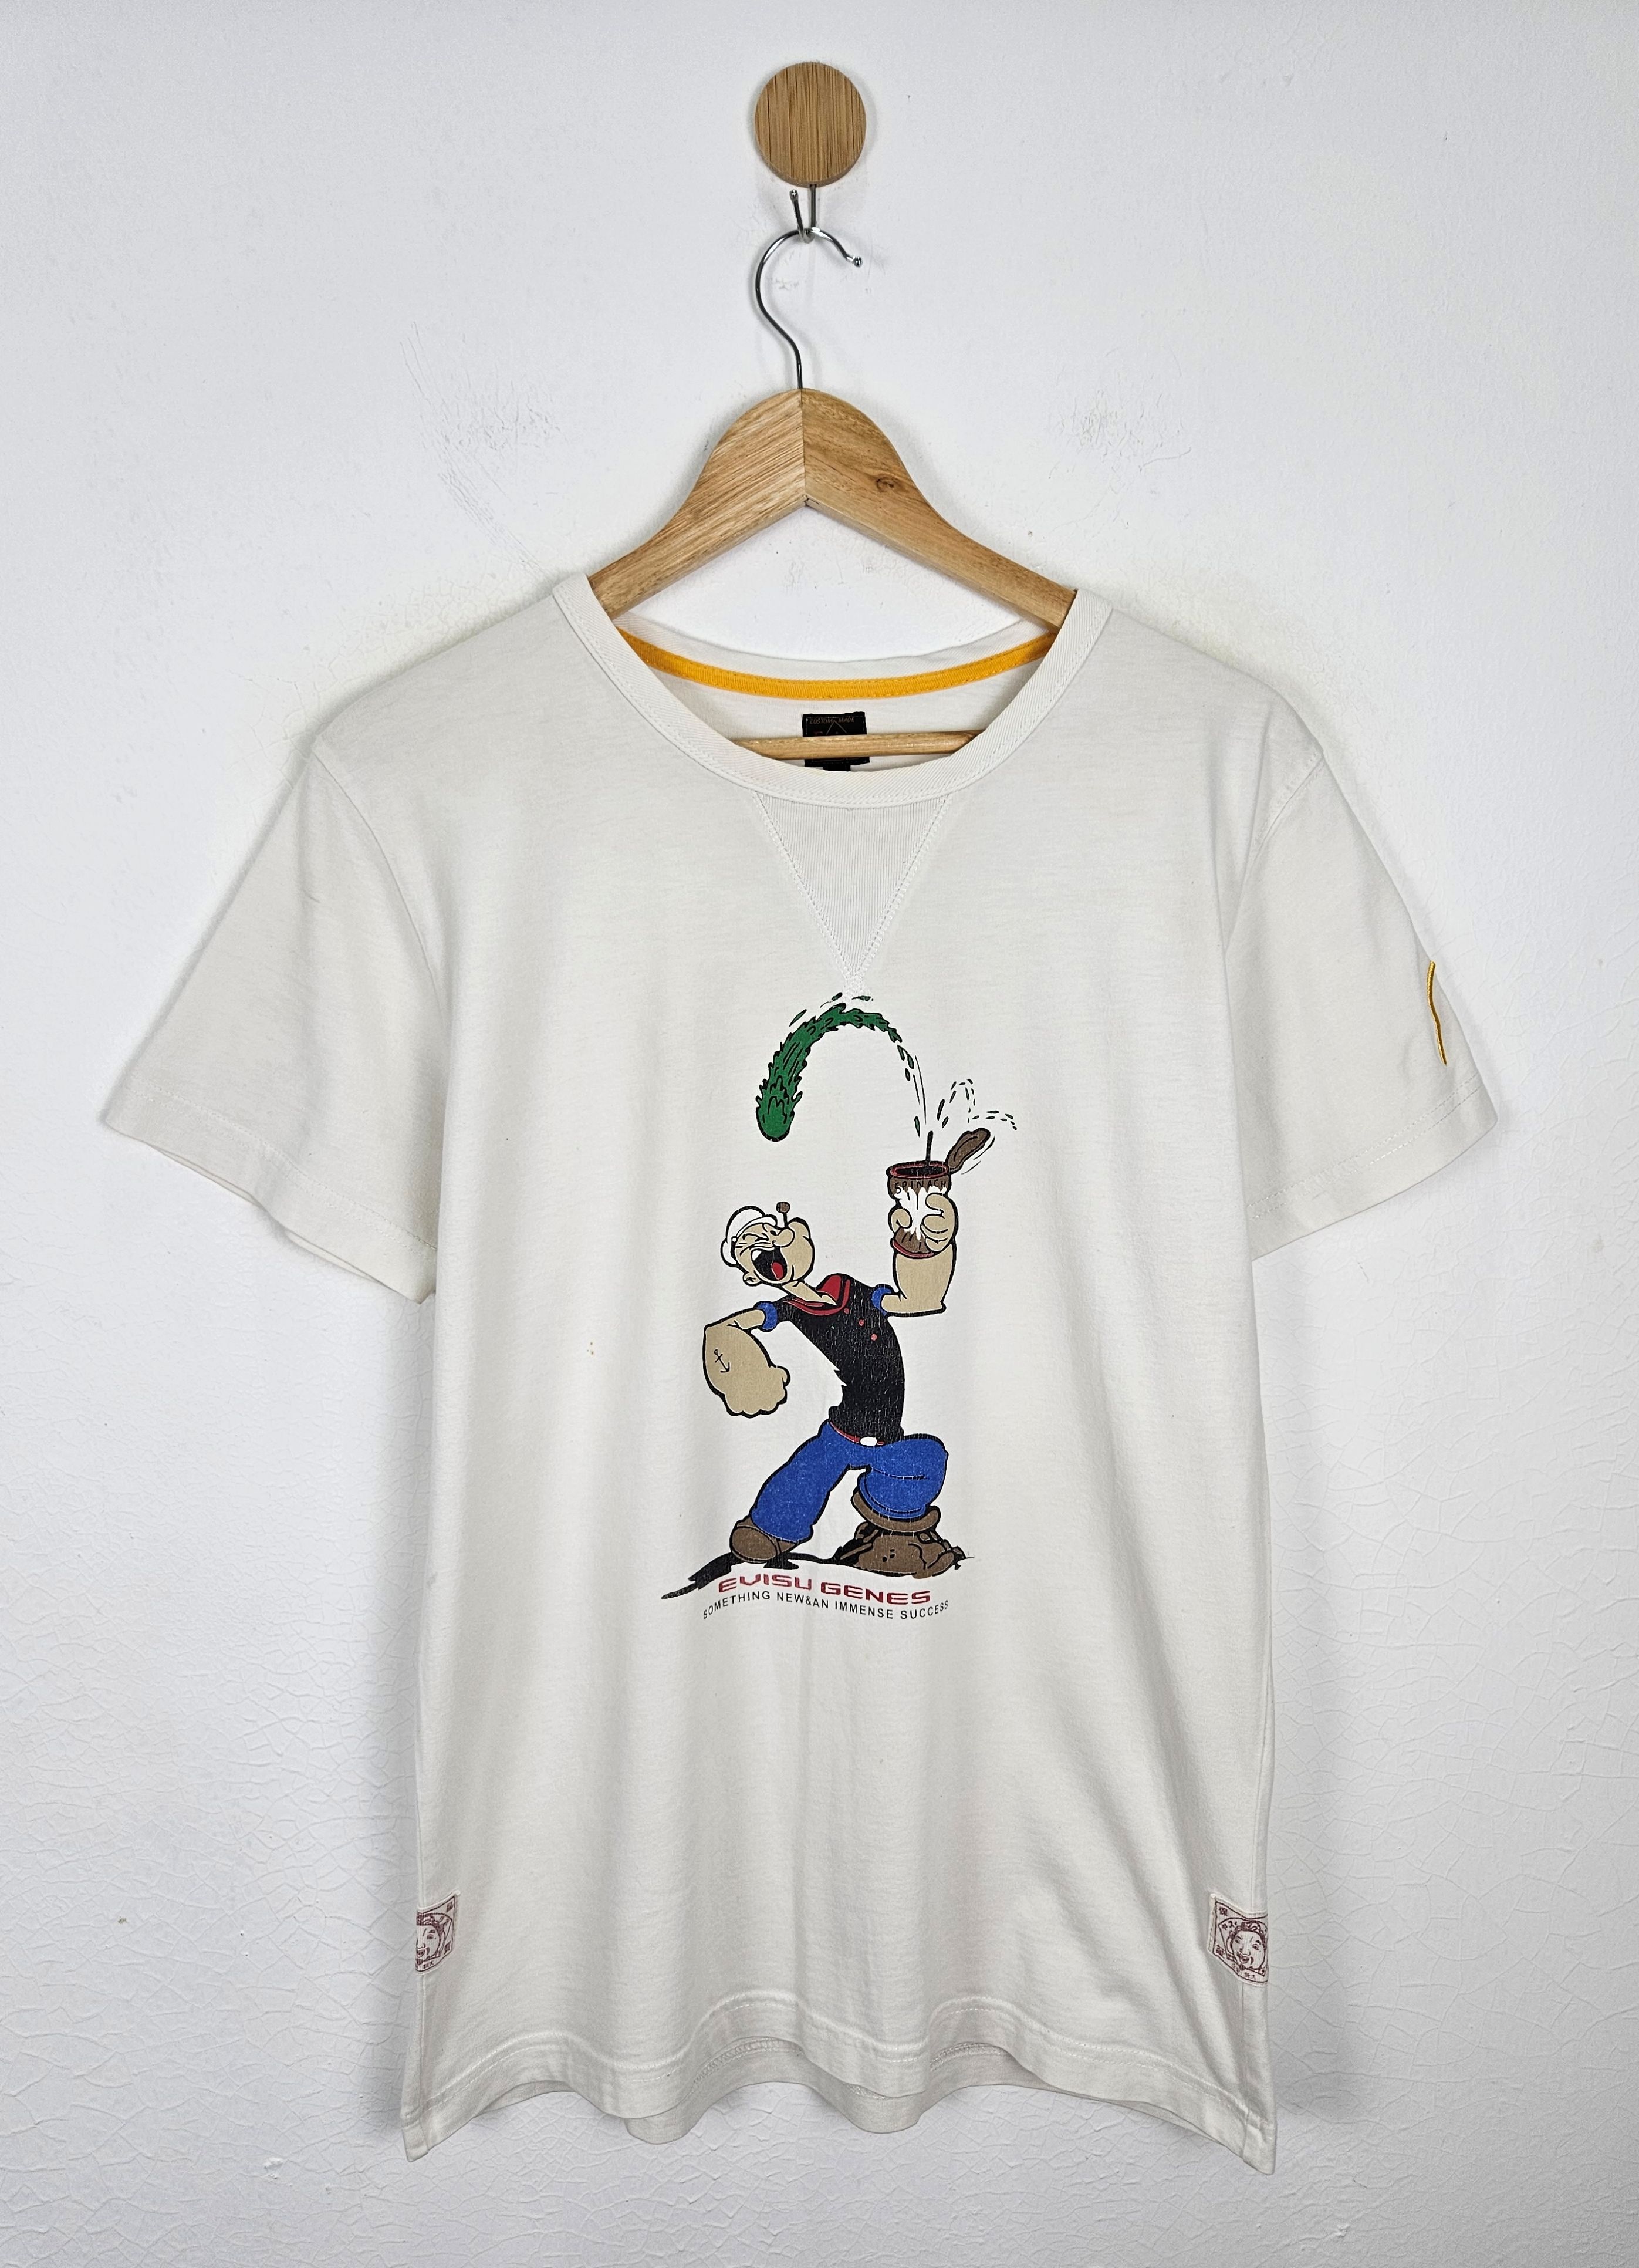 Evisu Popeye shirt - 1